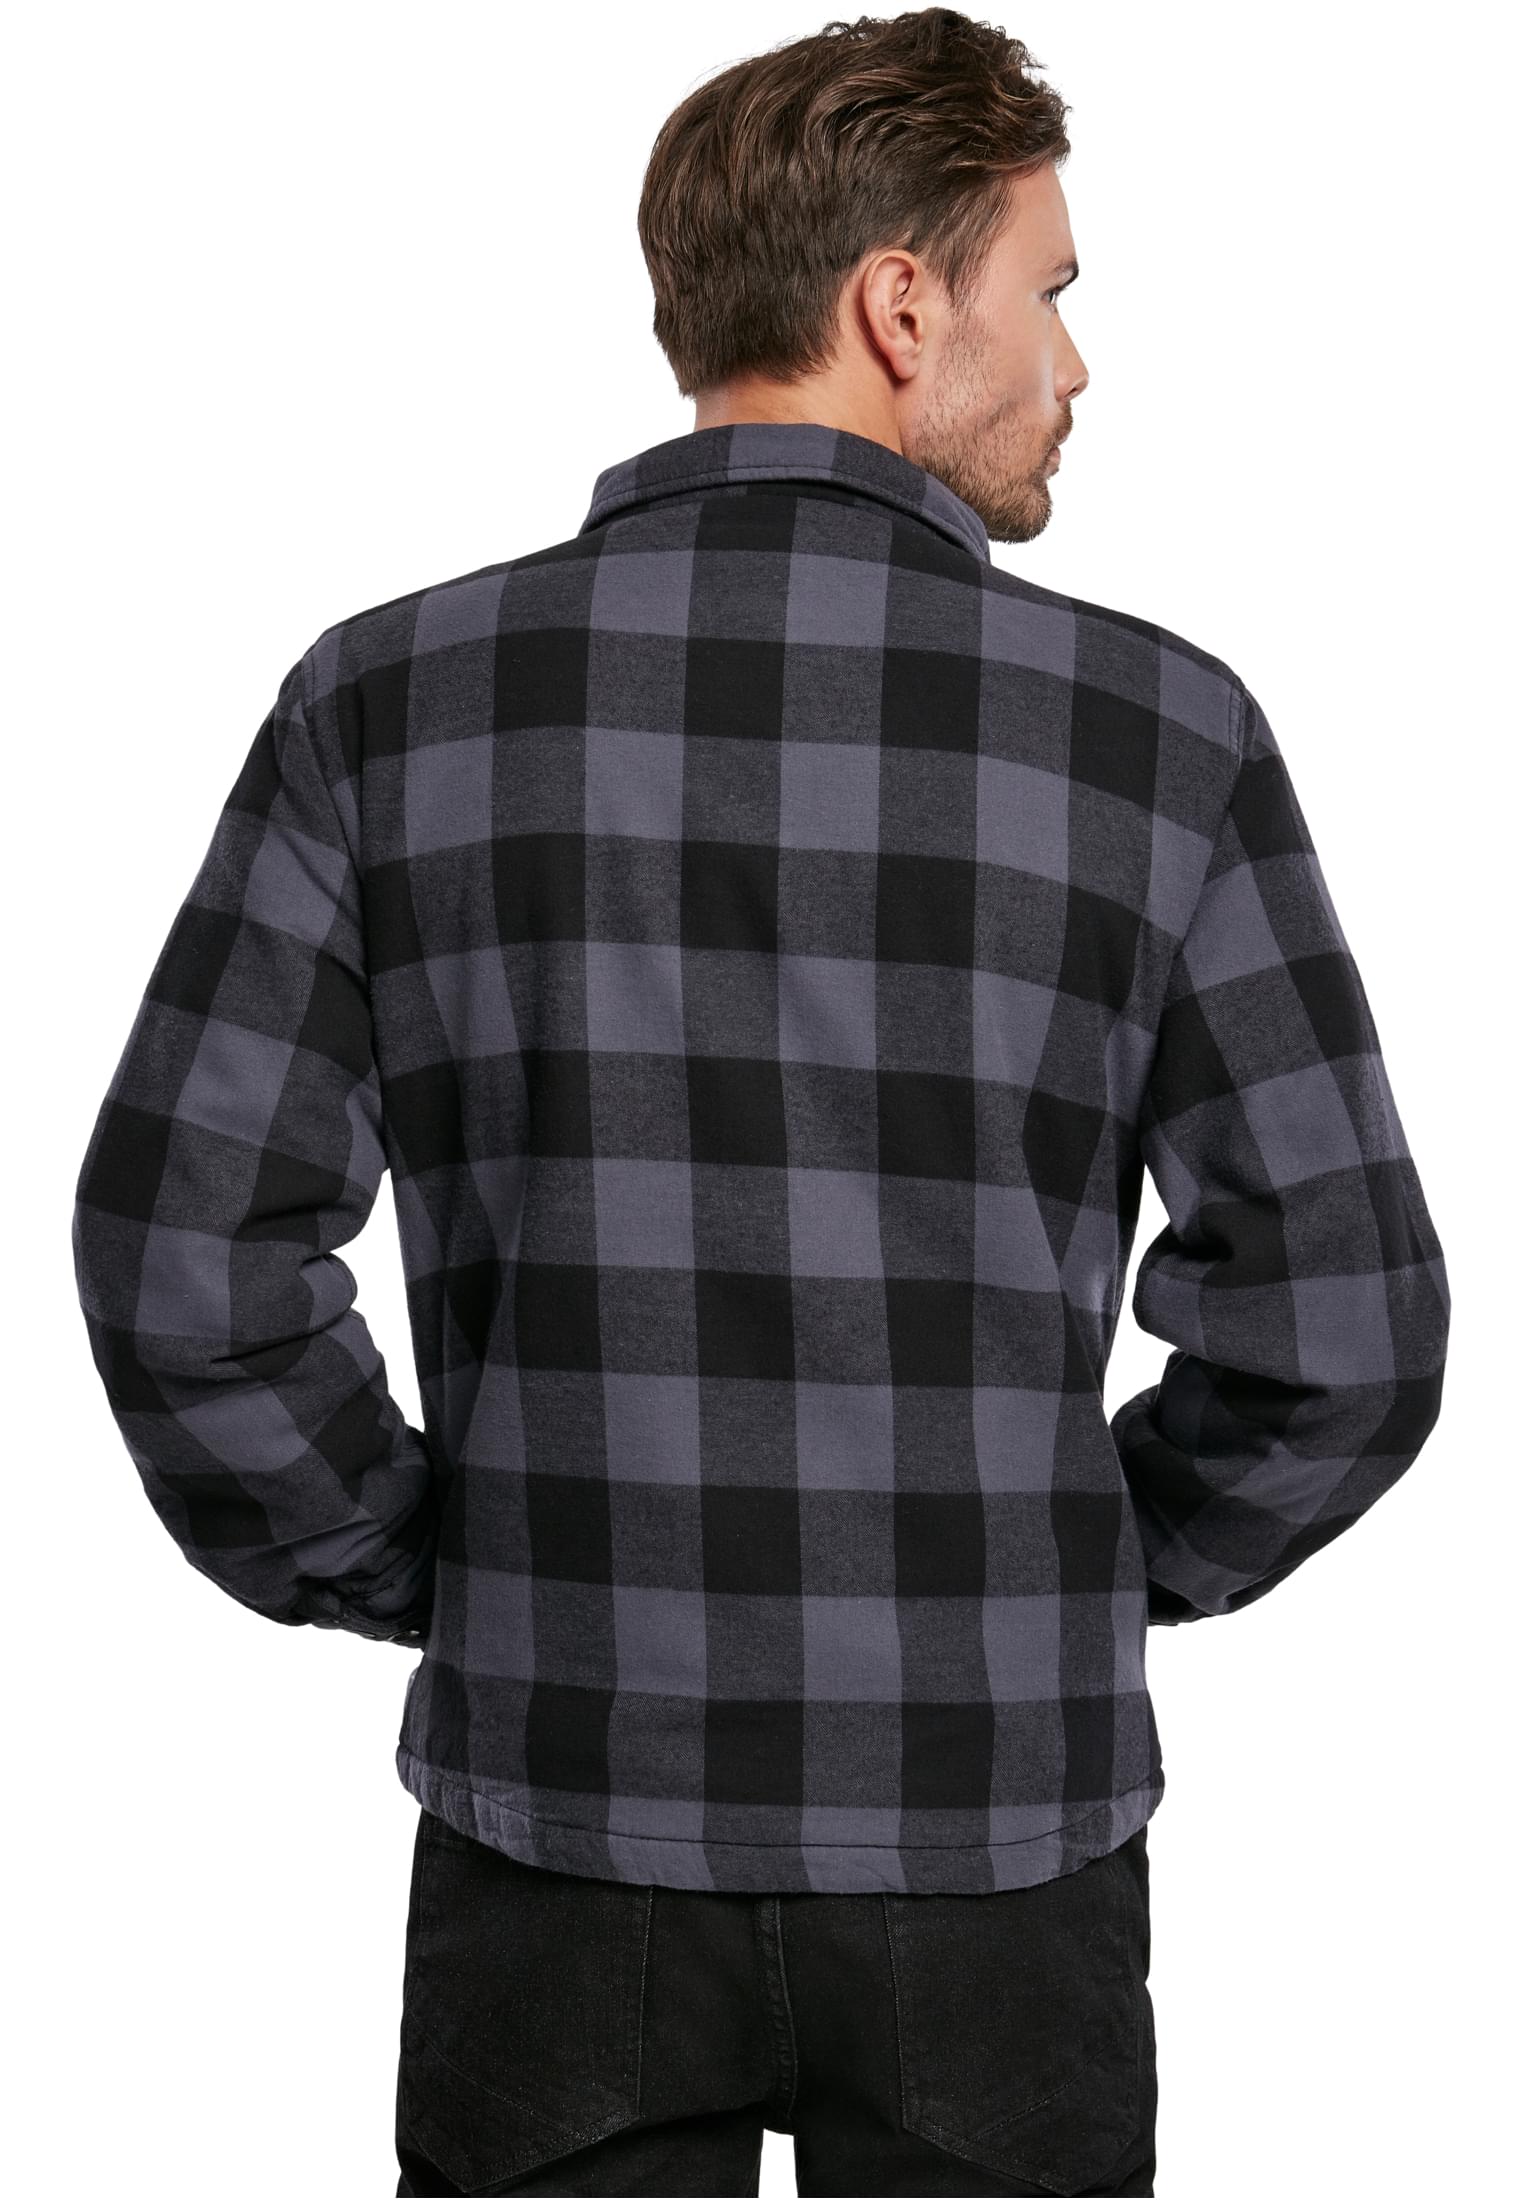 Jacken Lumberjacket in Farbe black/grey